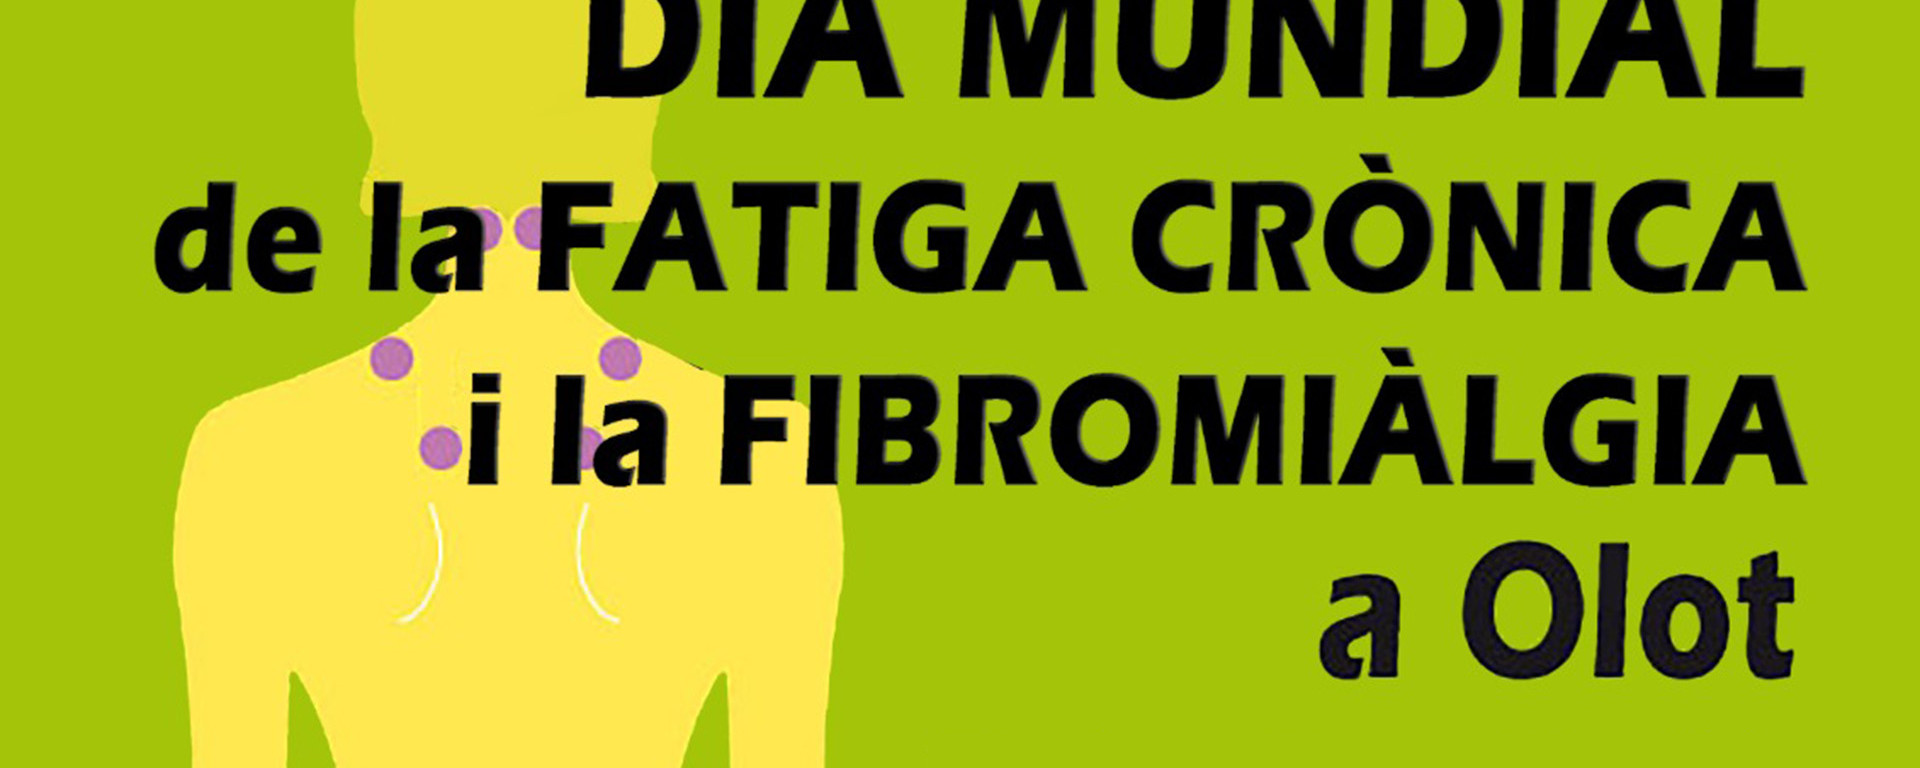 fatiga-cronica